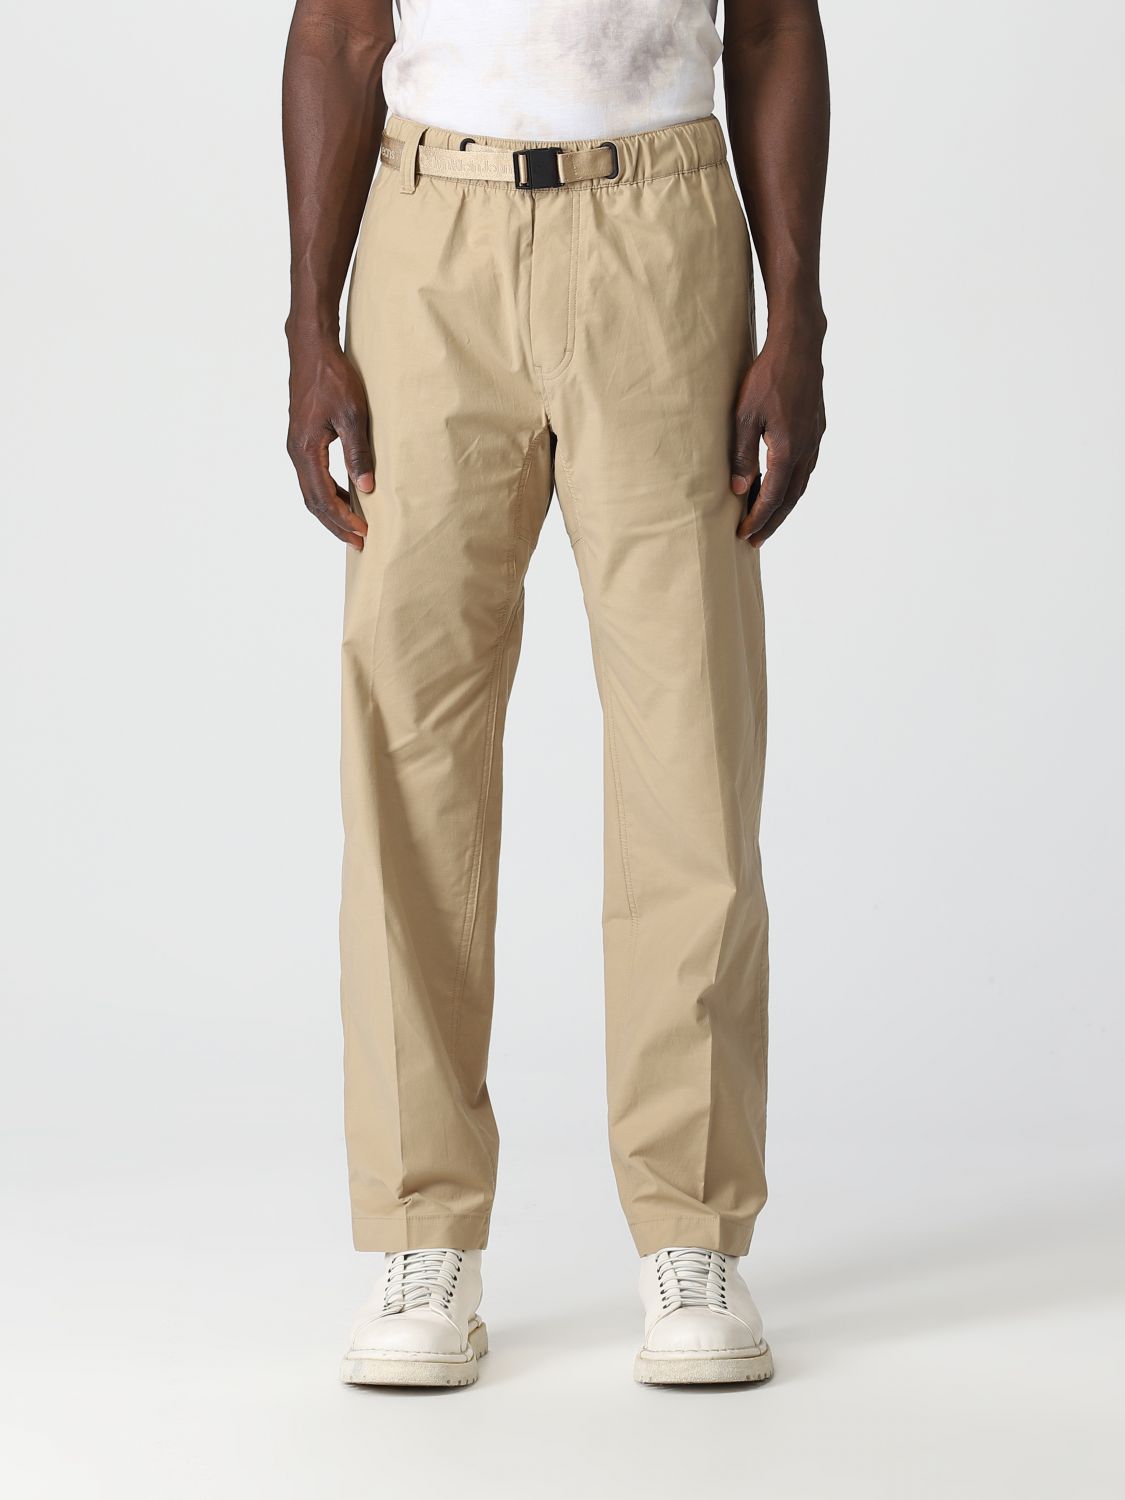 CALVIN KLEIN JEANS: pants for man - Beige | Calvin Klein Jeans pants ...